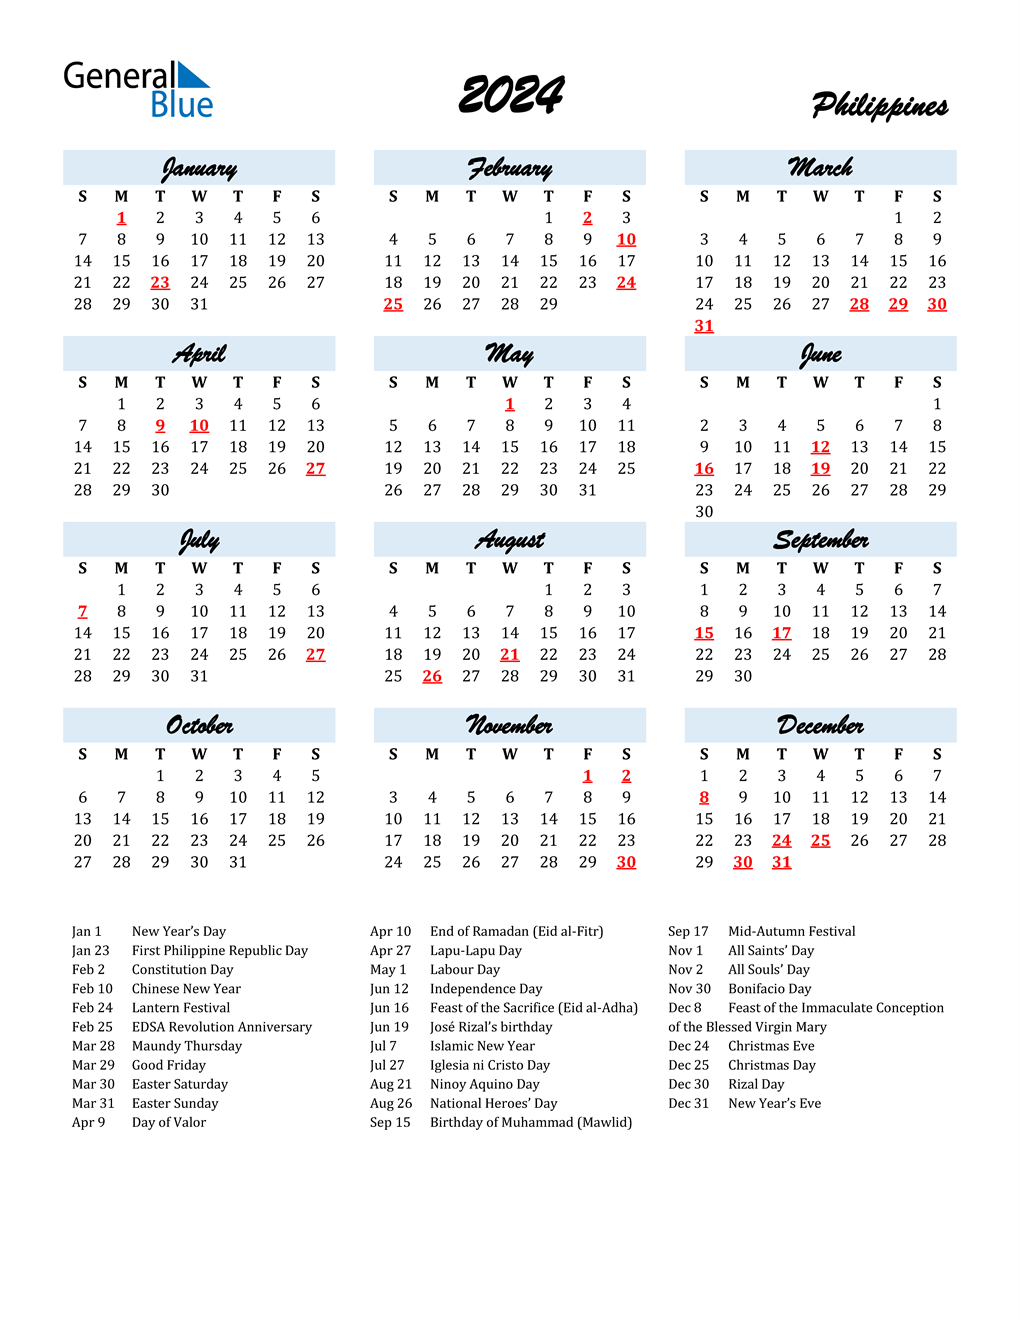 2024 Philippines Calendar With Holidays - Photos